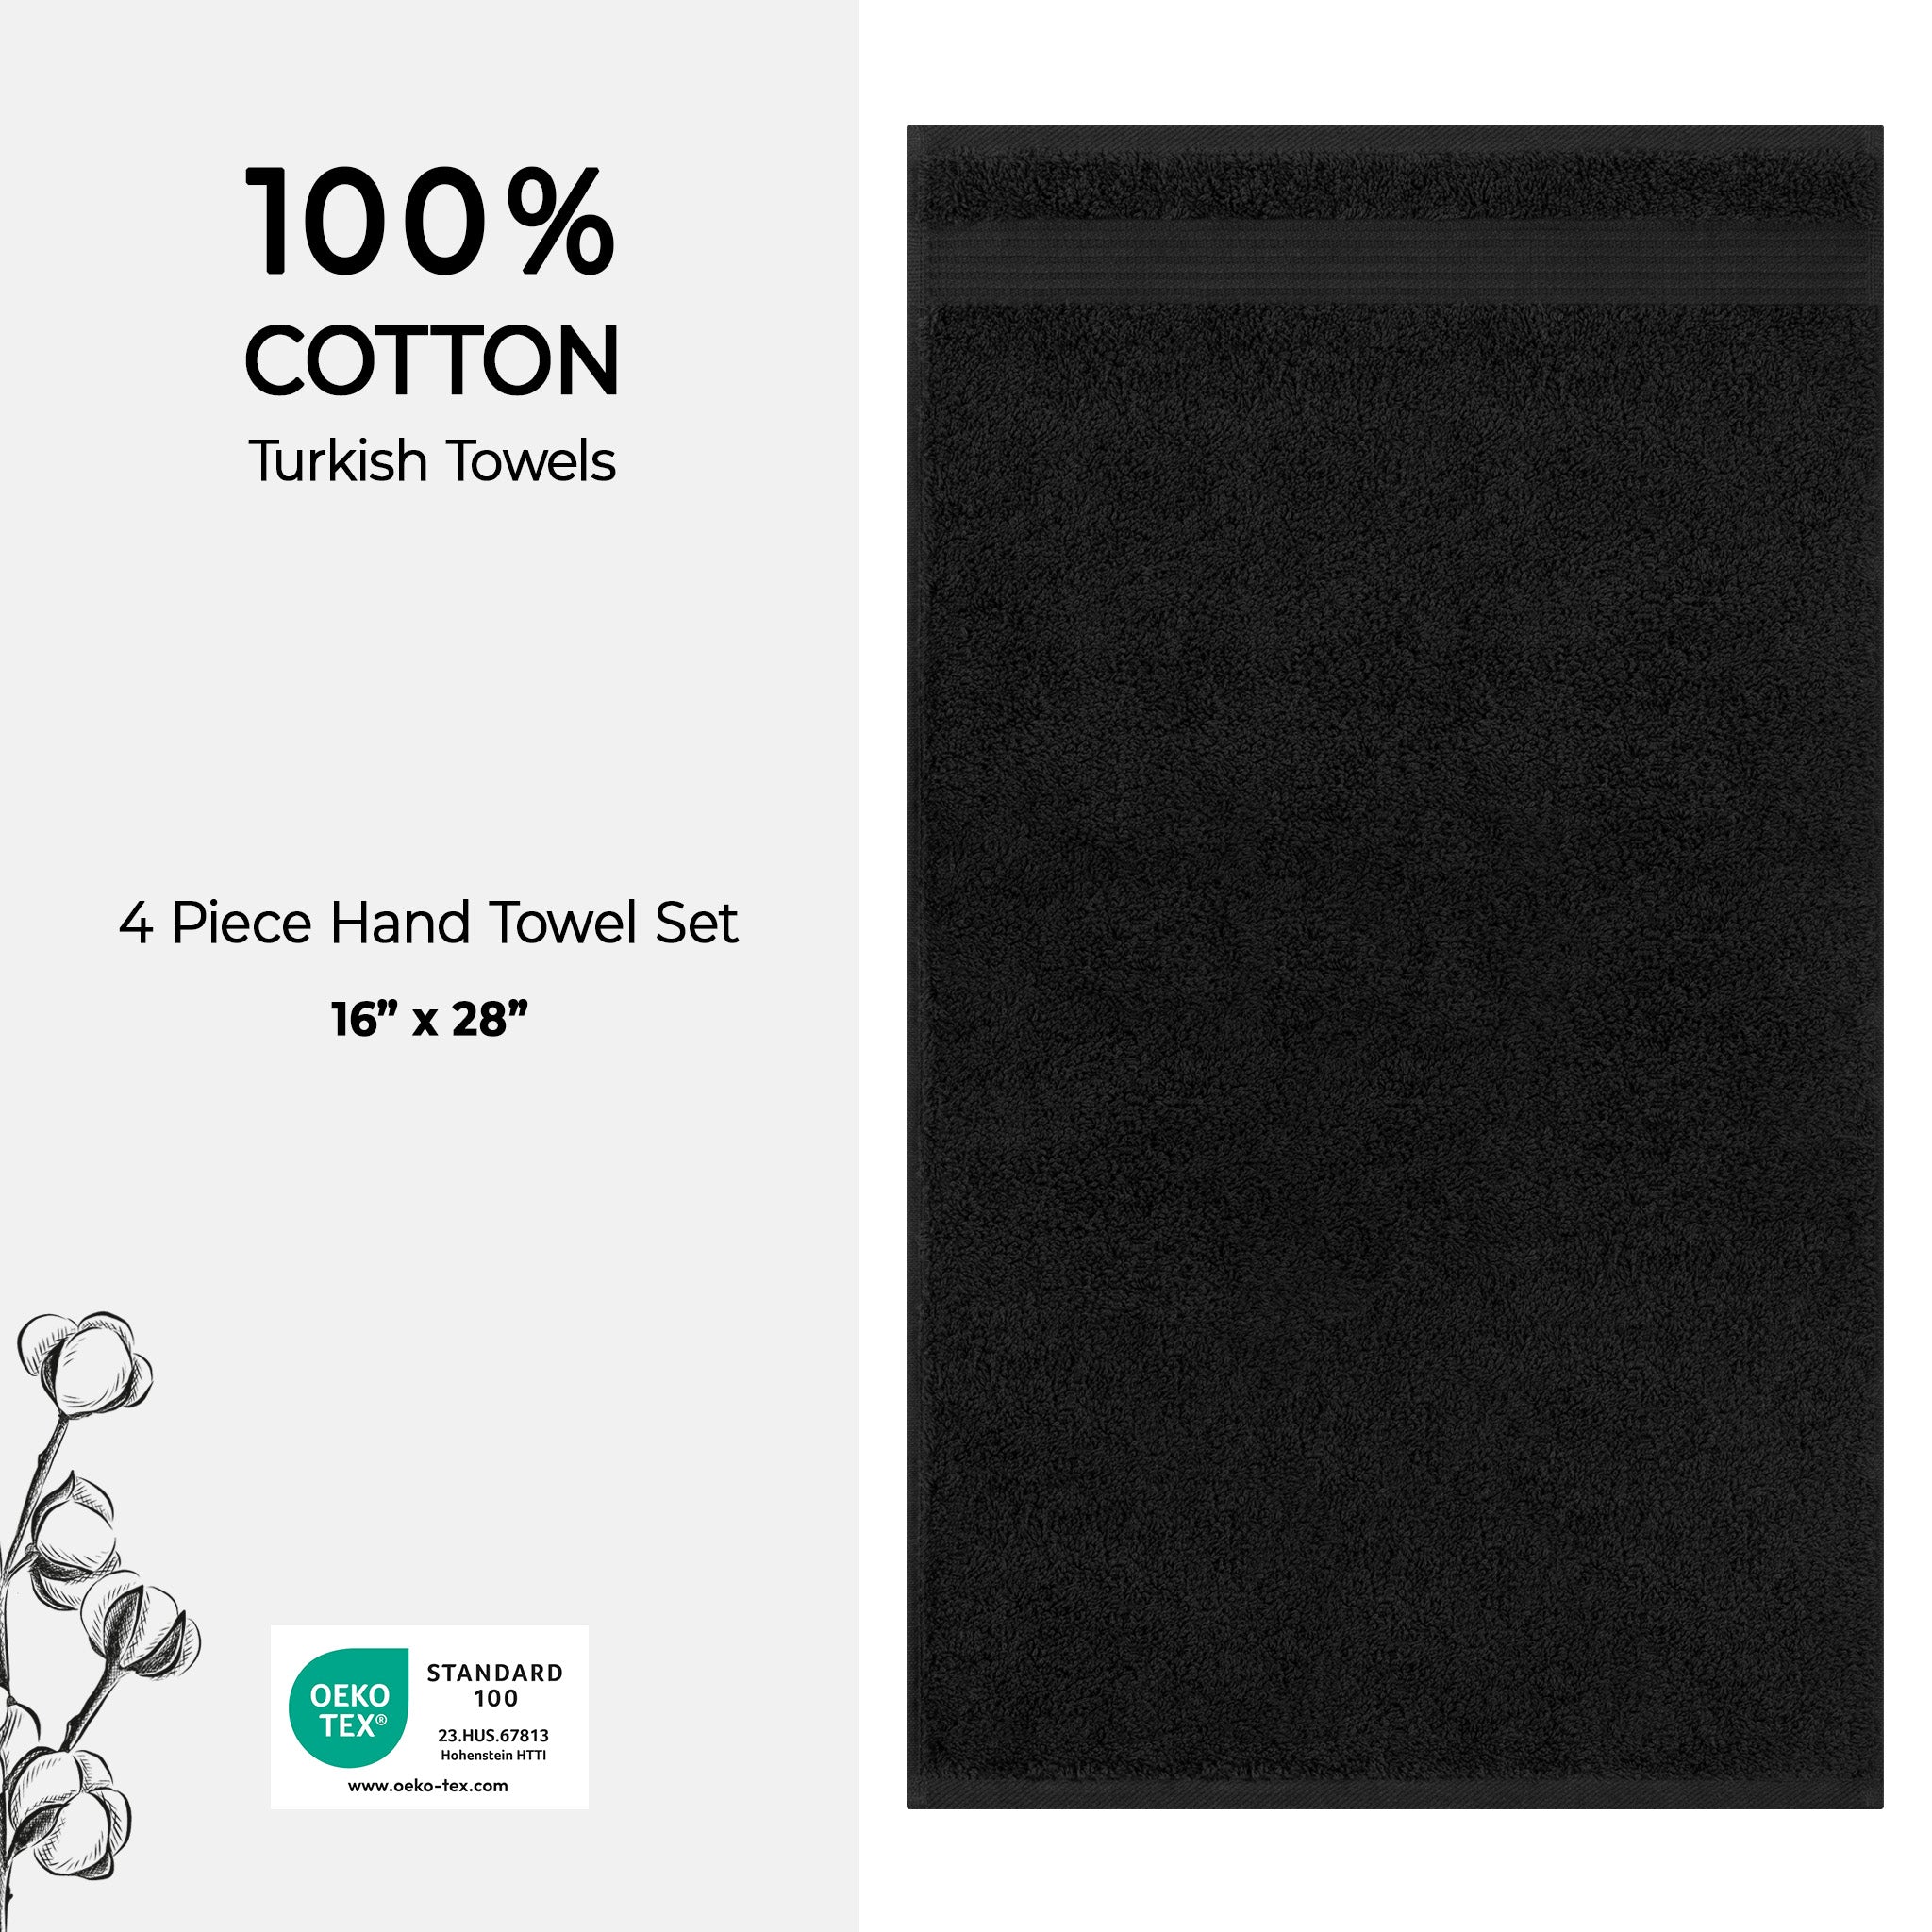 American Soft Linen Bekos 100% Cotton Turkish Towels, 4 Piece Hand Towel Set -black-04